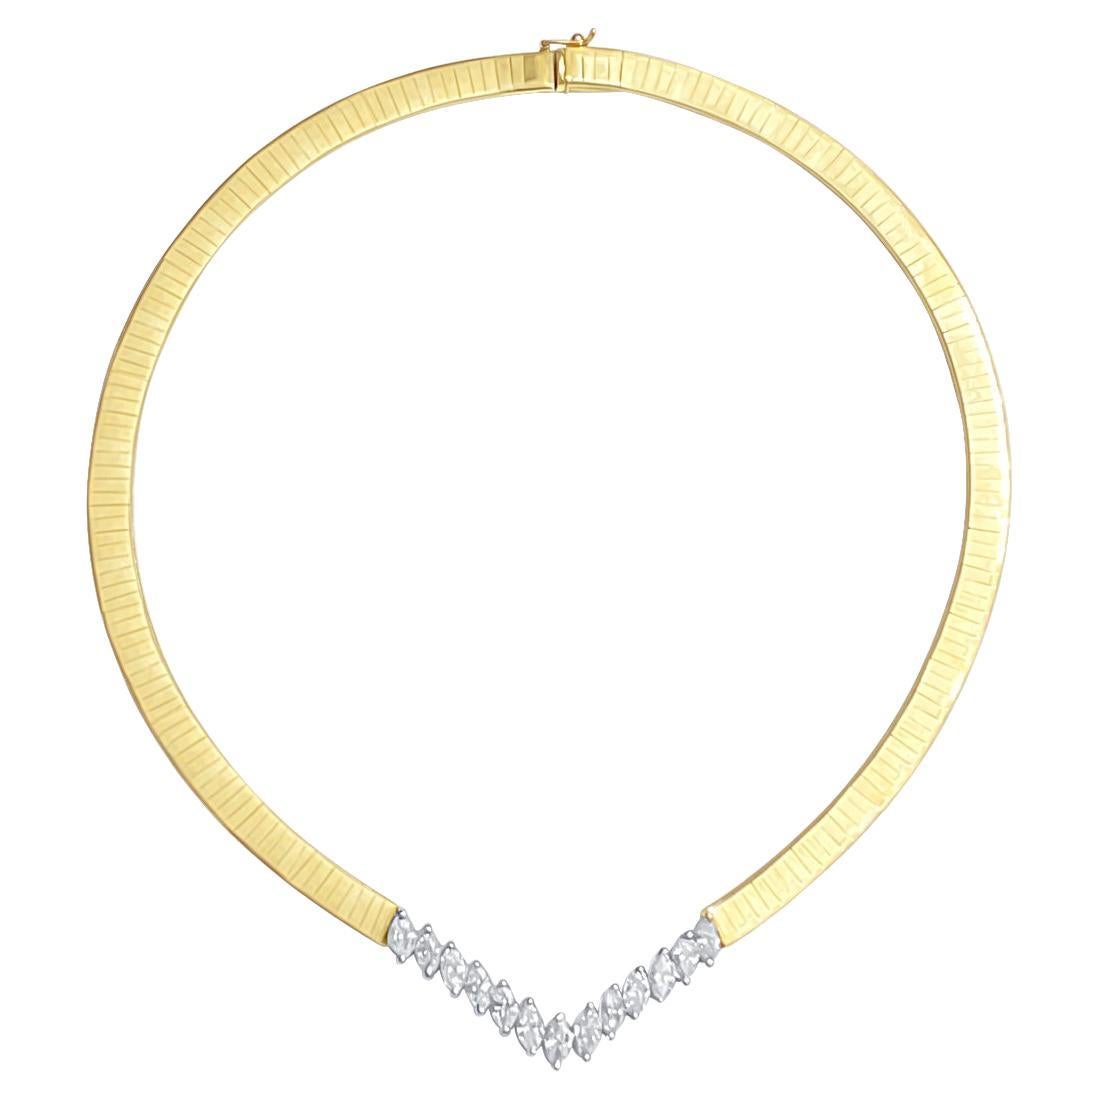 4.00 Carat Marquise Cut Diamond Herringbone Choker Necklace in 14k Yellow Gold